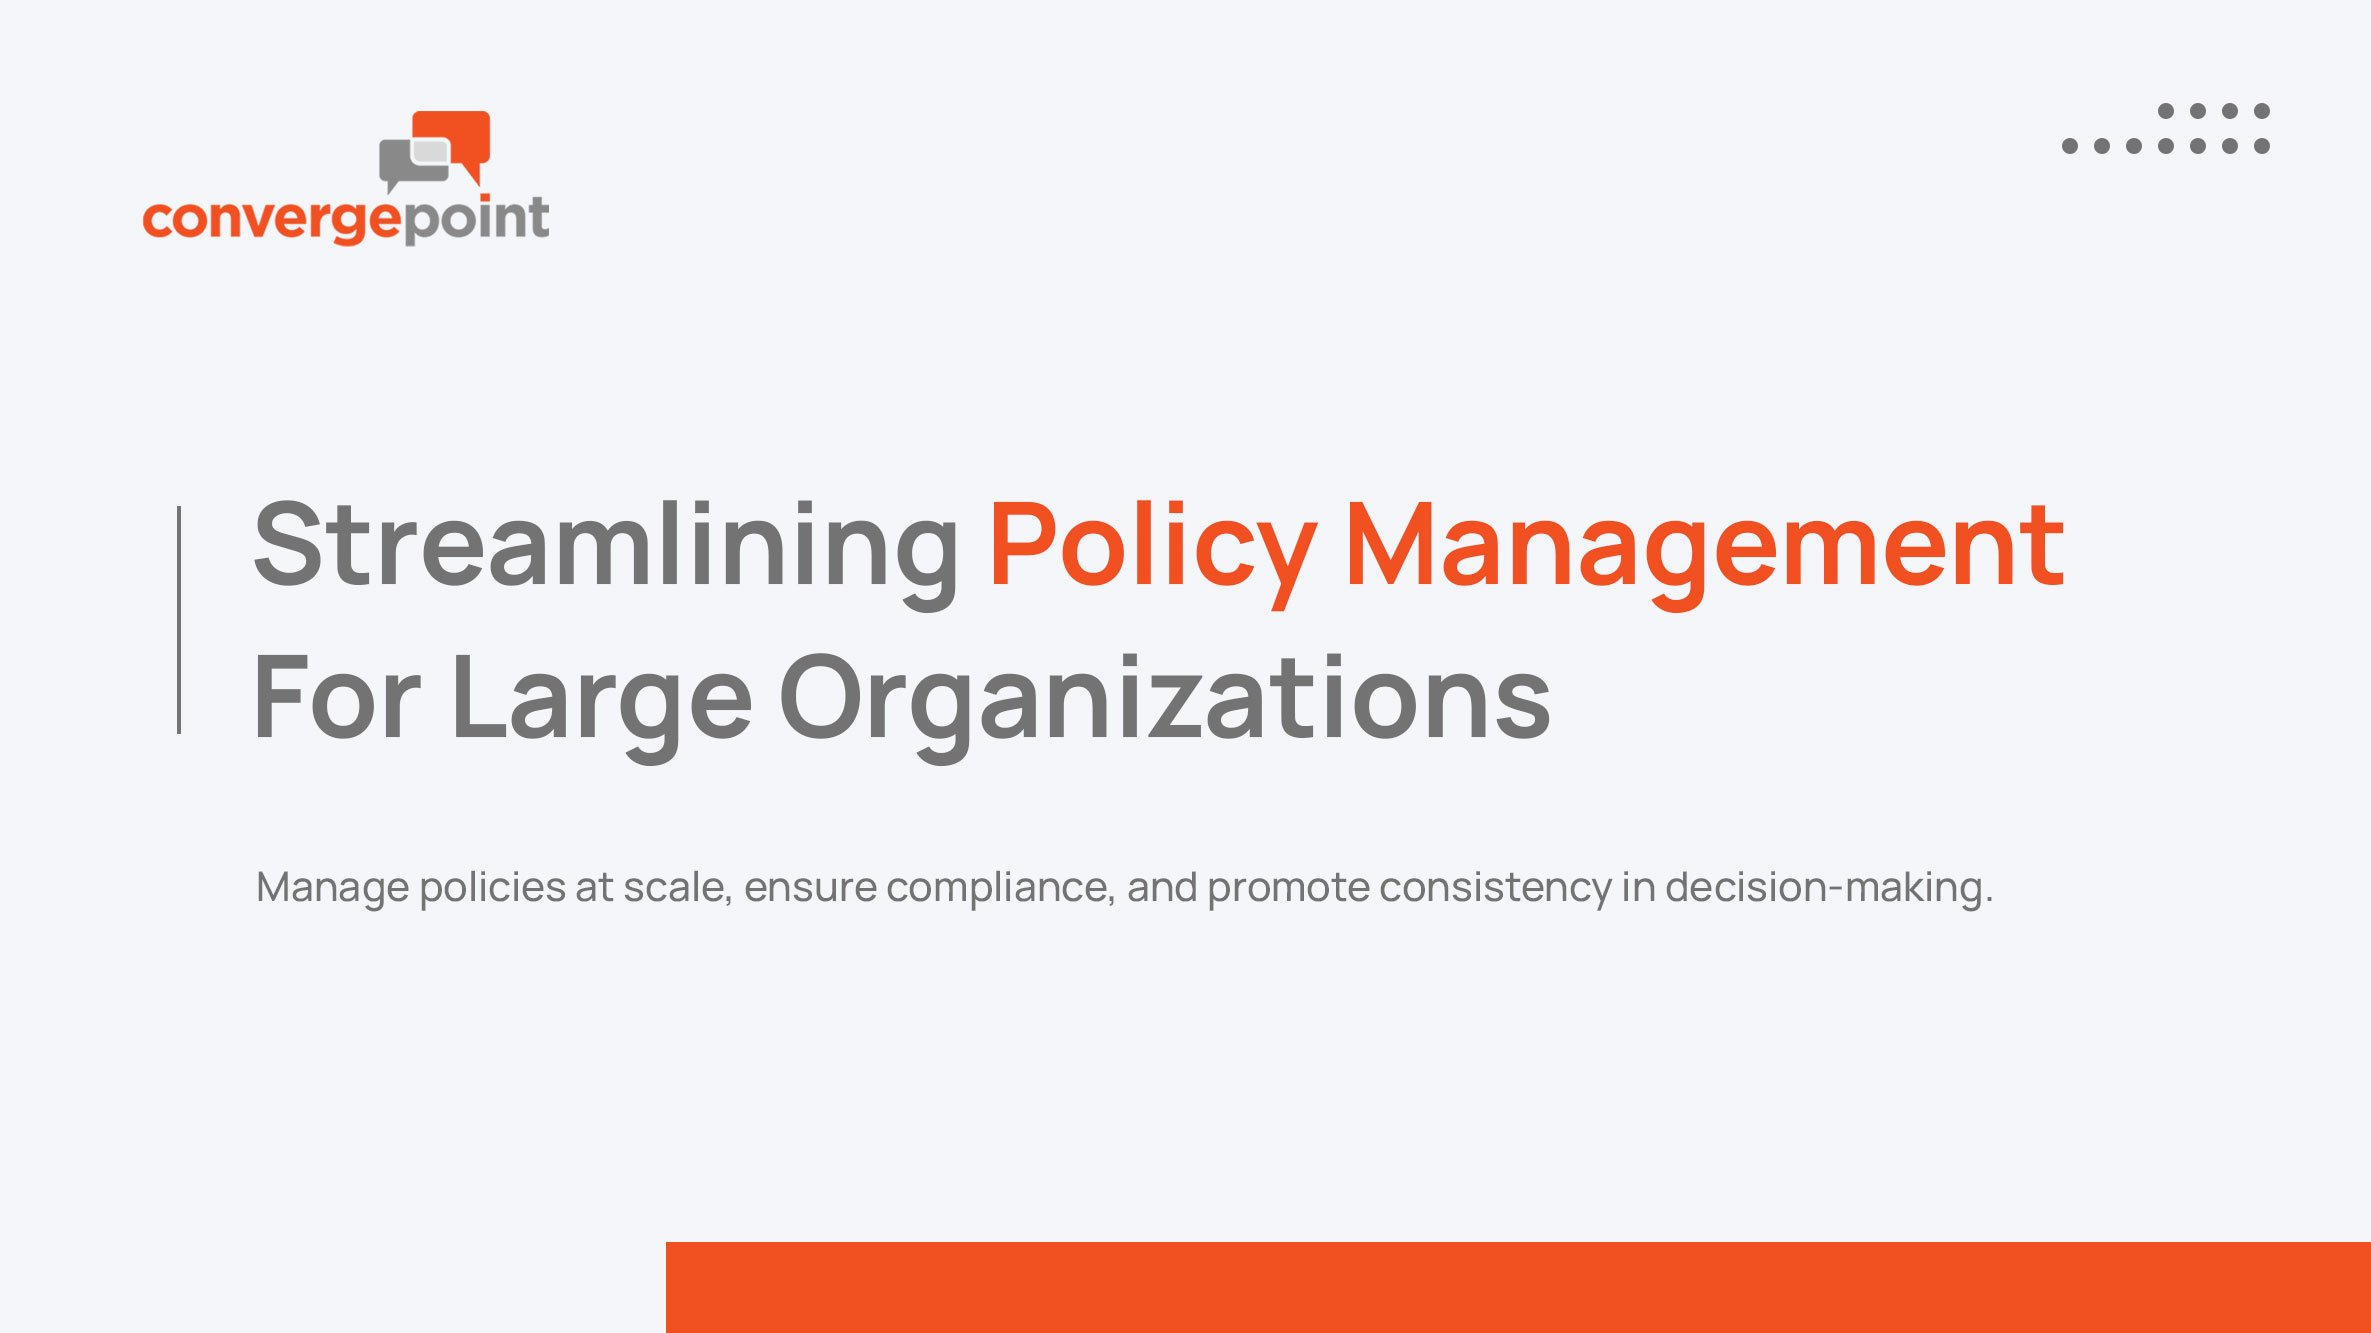 streamlining policy management